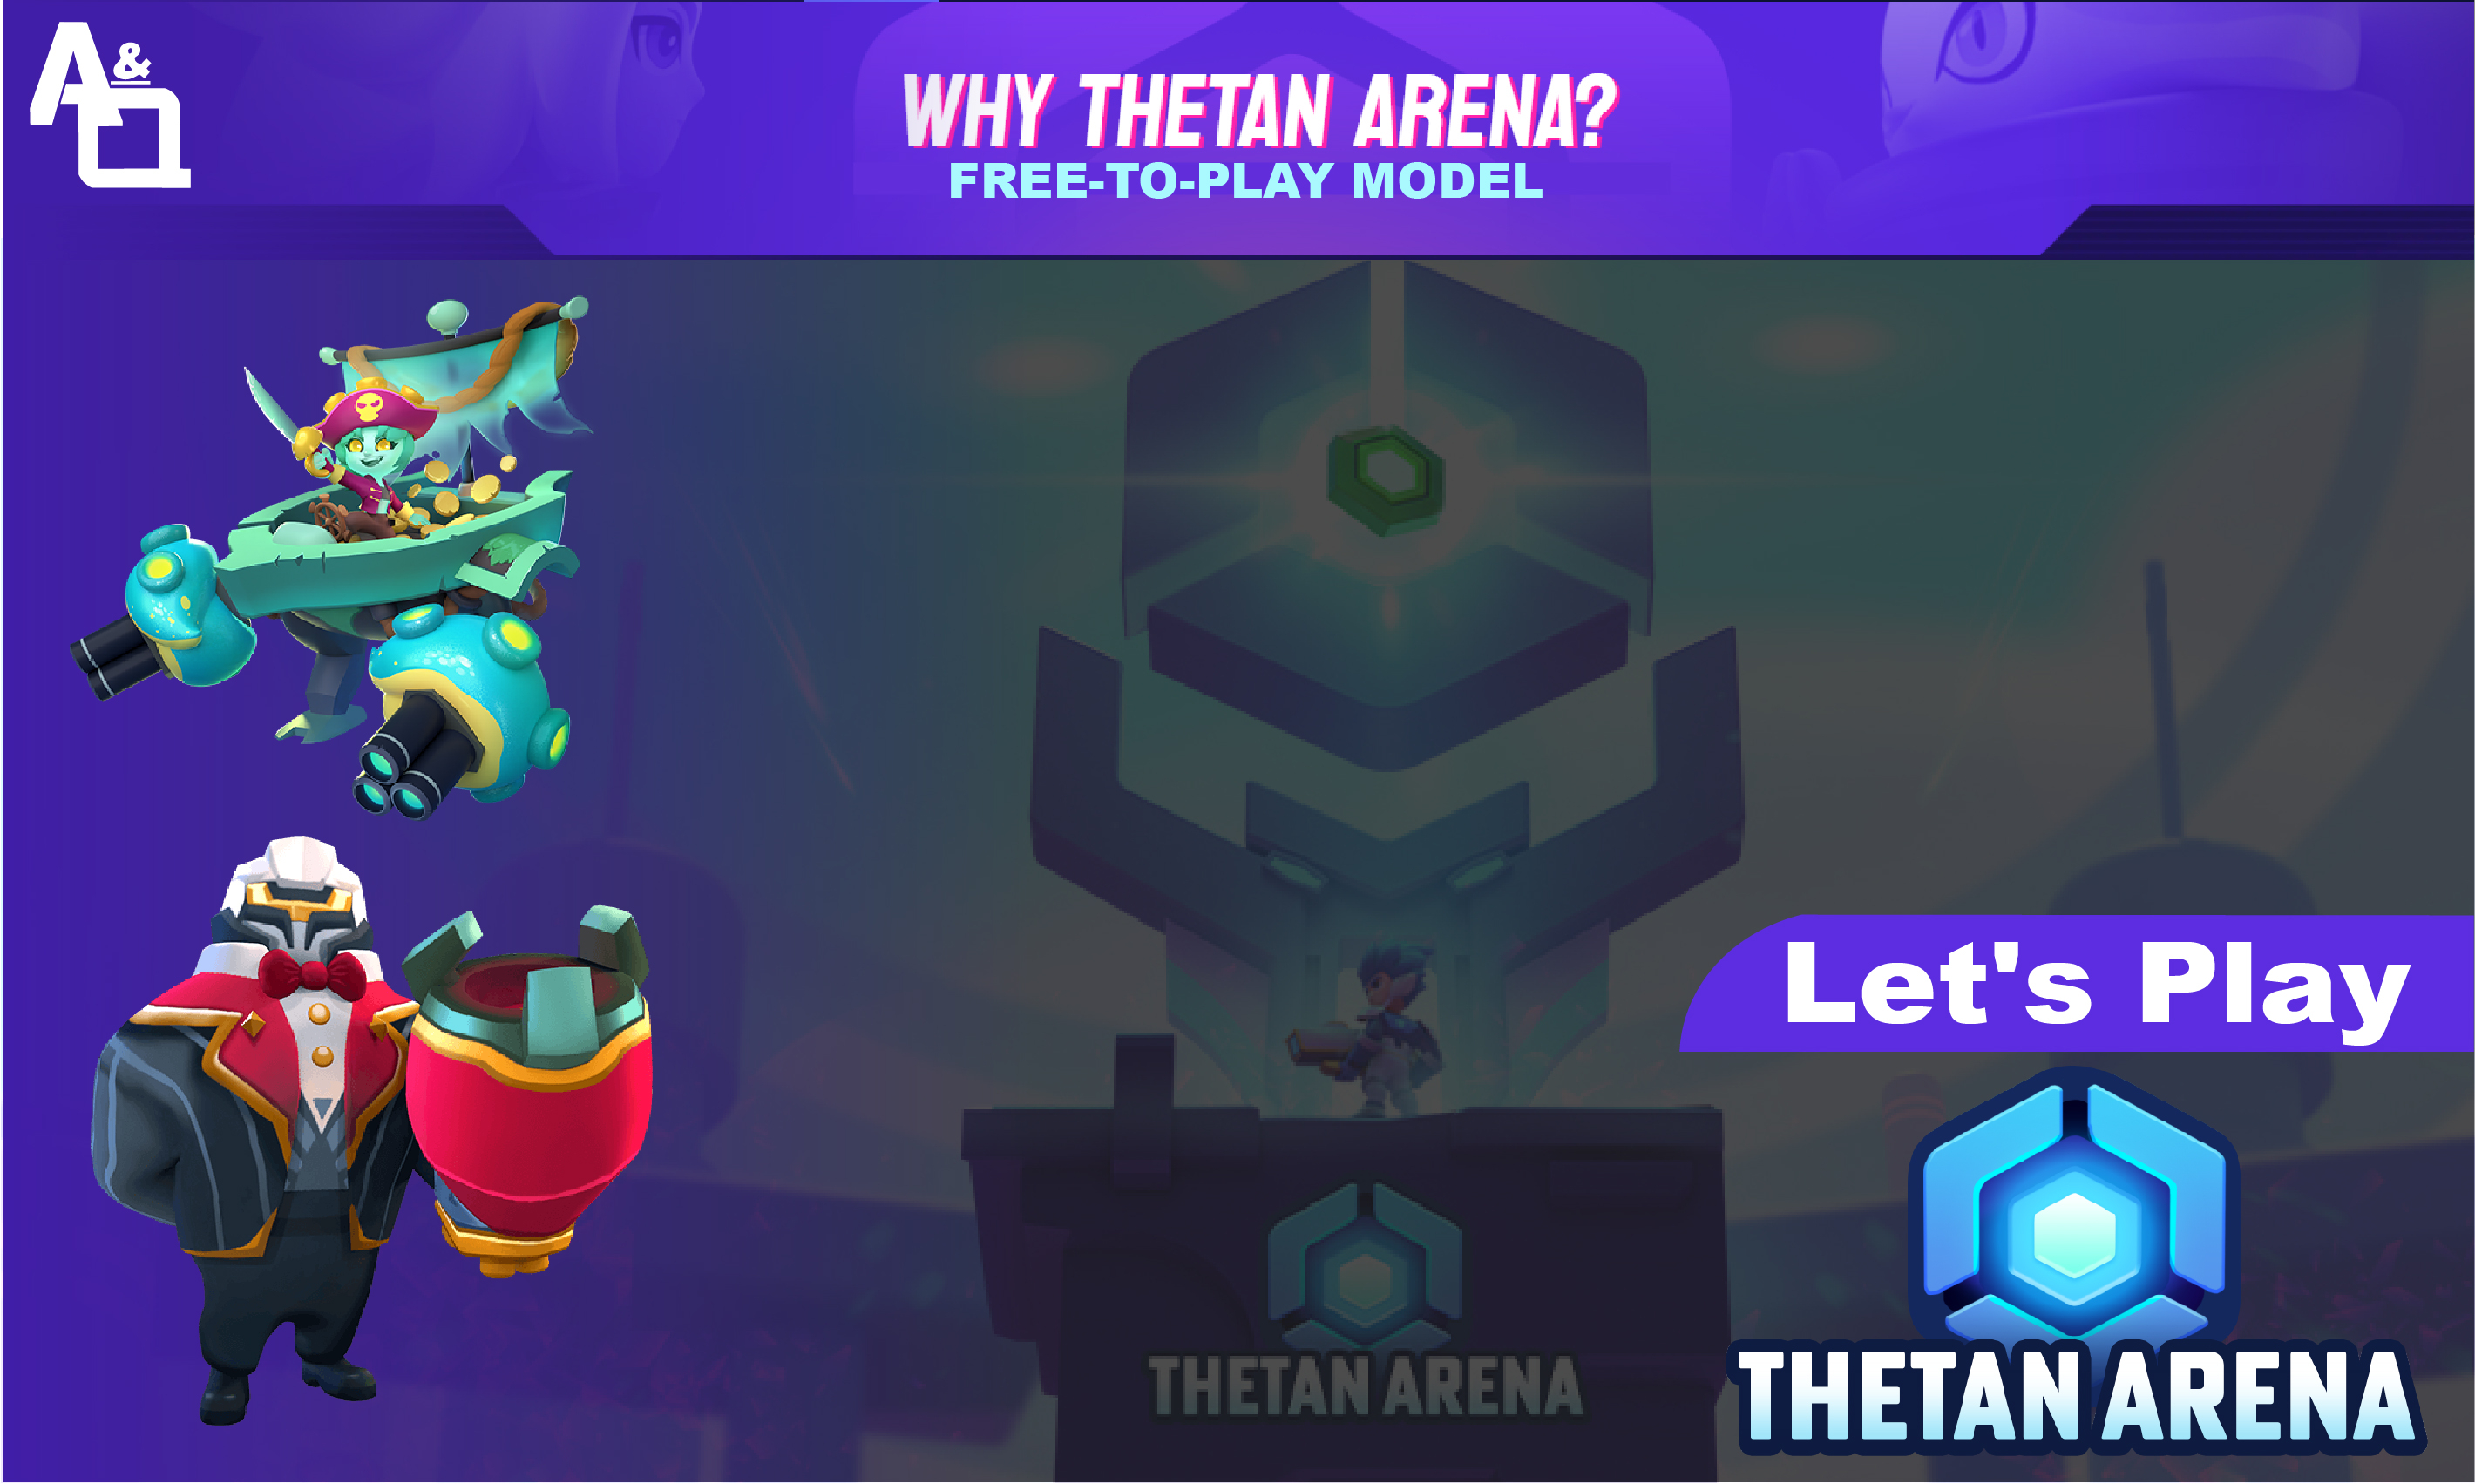 A&Q GameFi | Play The Thetan Arena